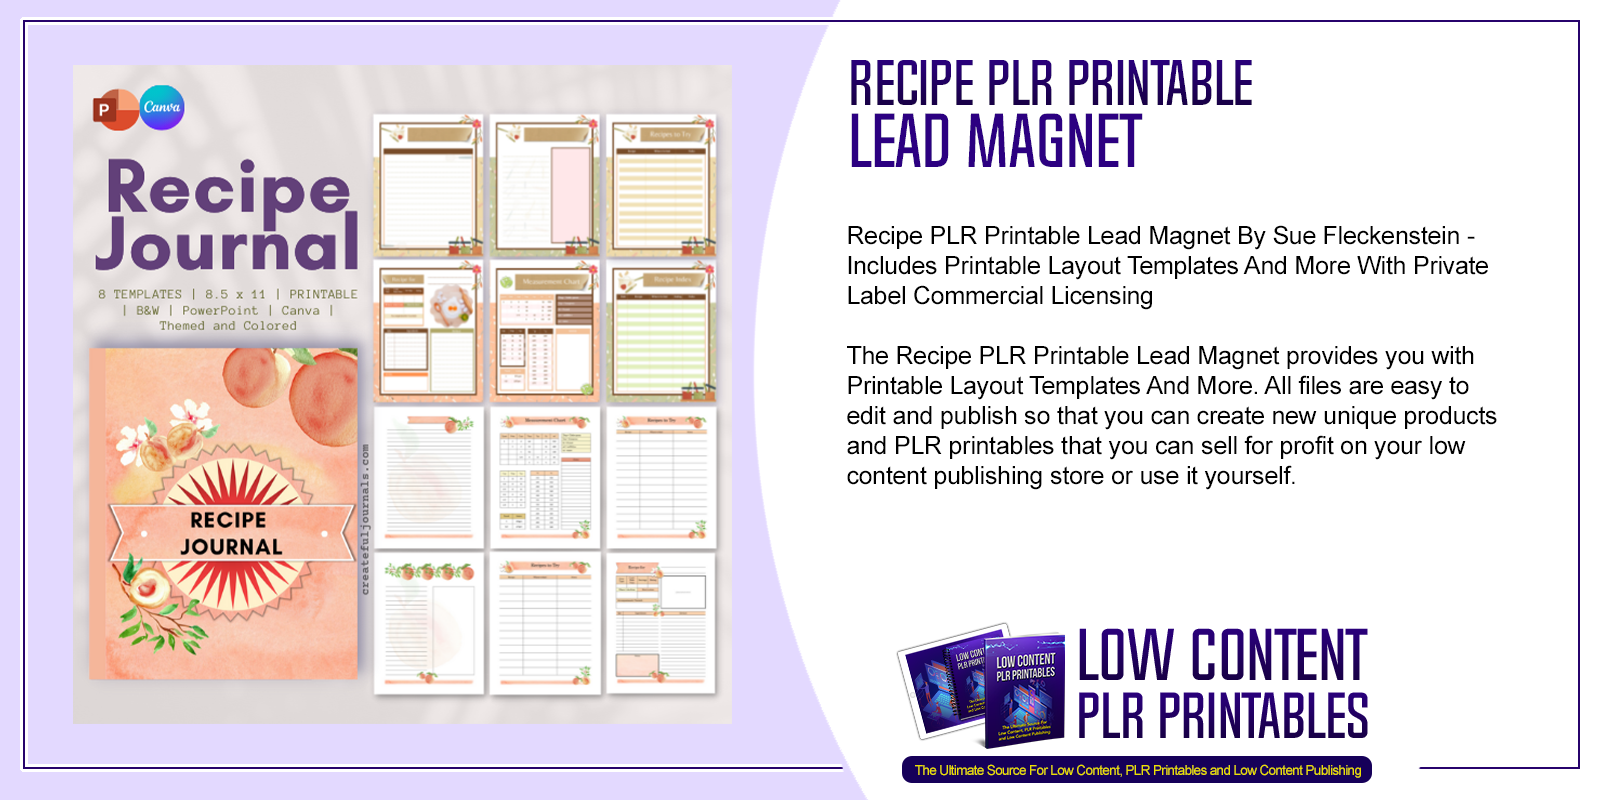 Recipe PLR Printable Lead Magnet